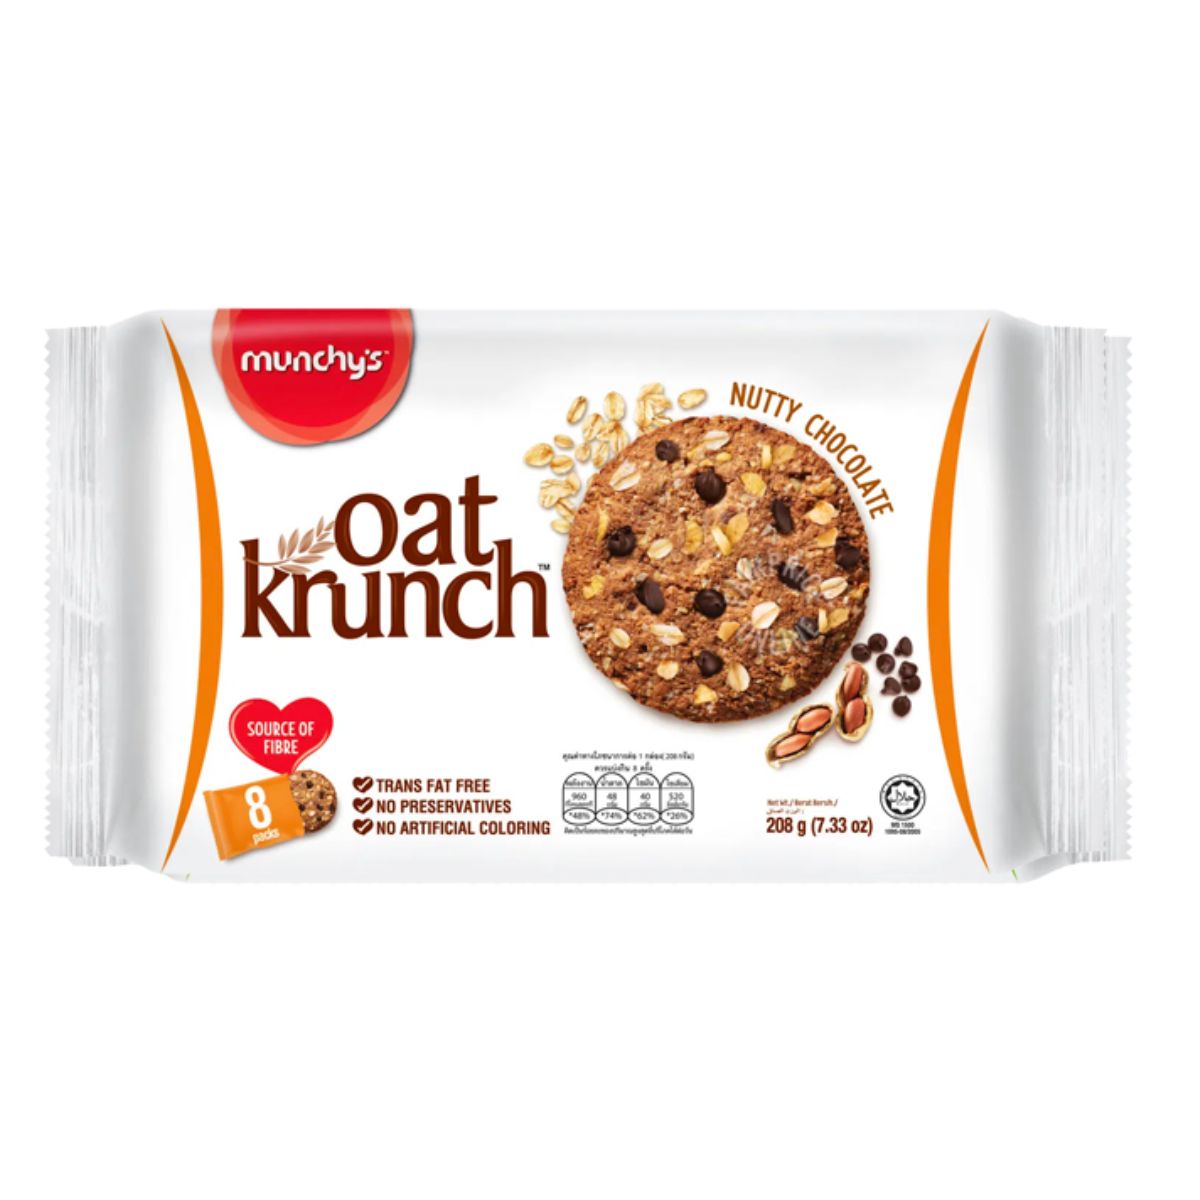 Munchy's Oat Krunch - Nutty Chocolate - 208g | Grocery Babu | Azha Pasa